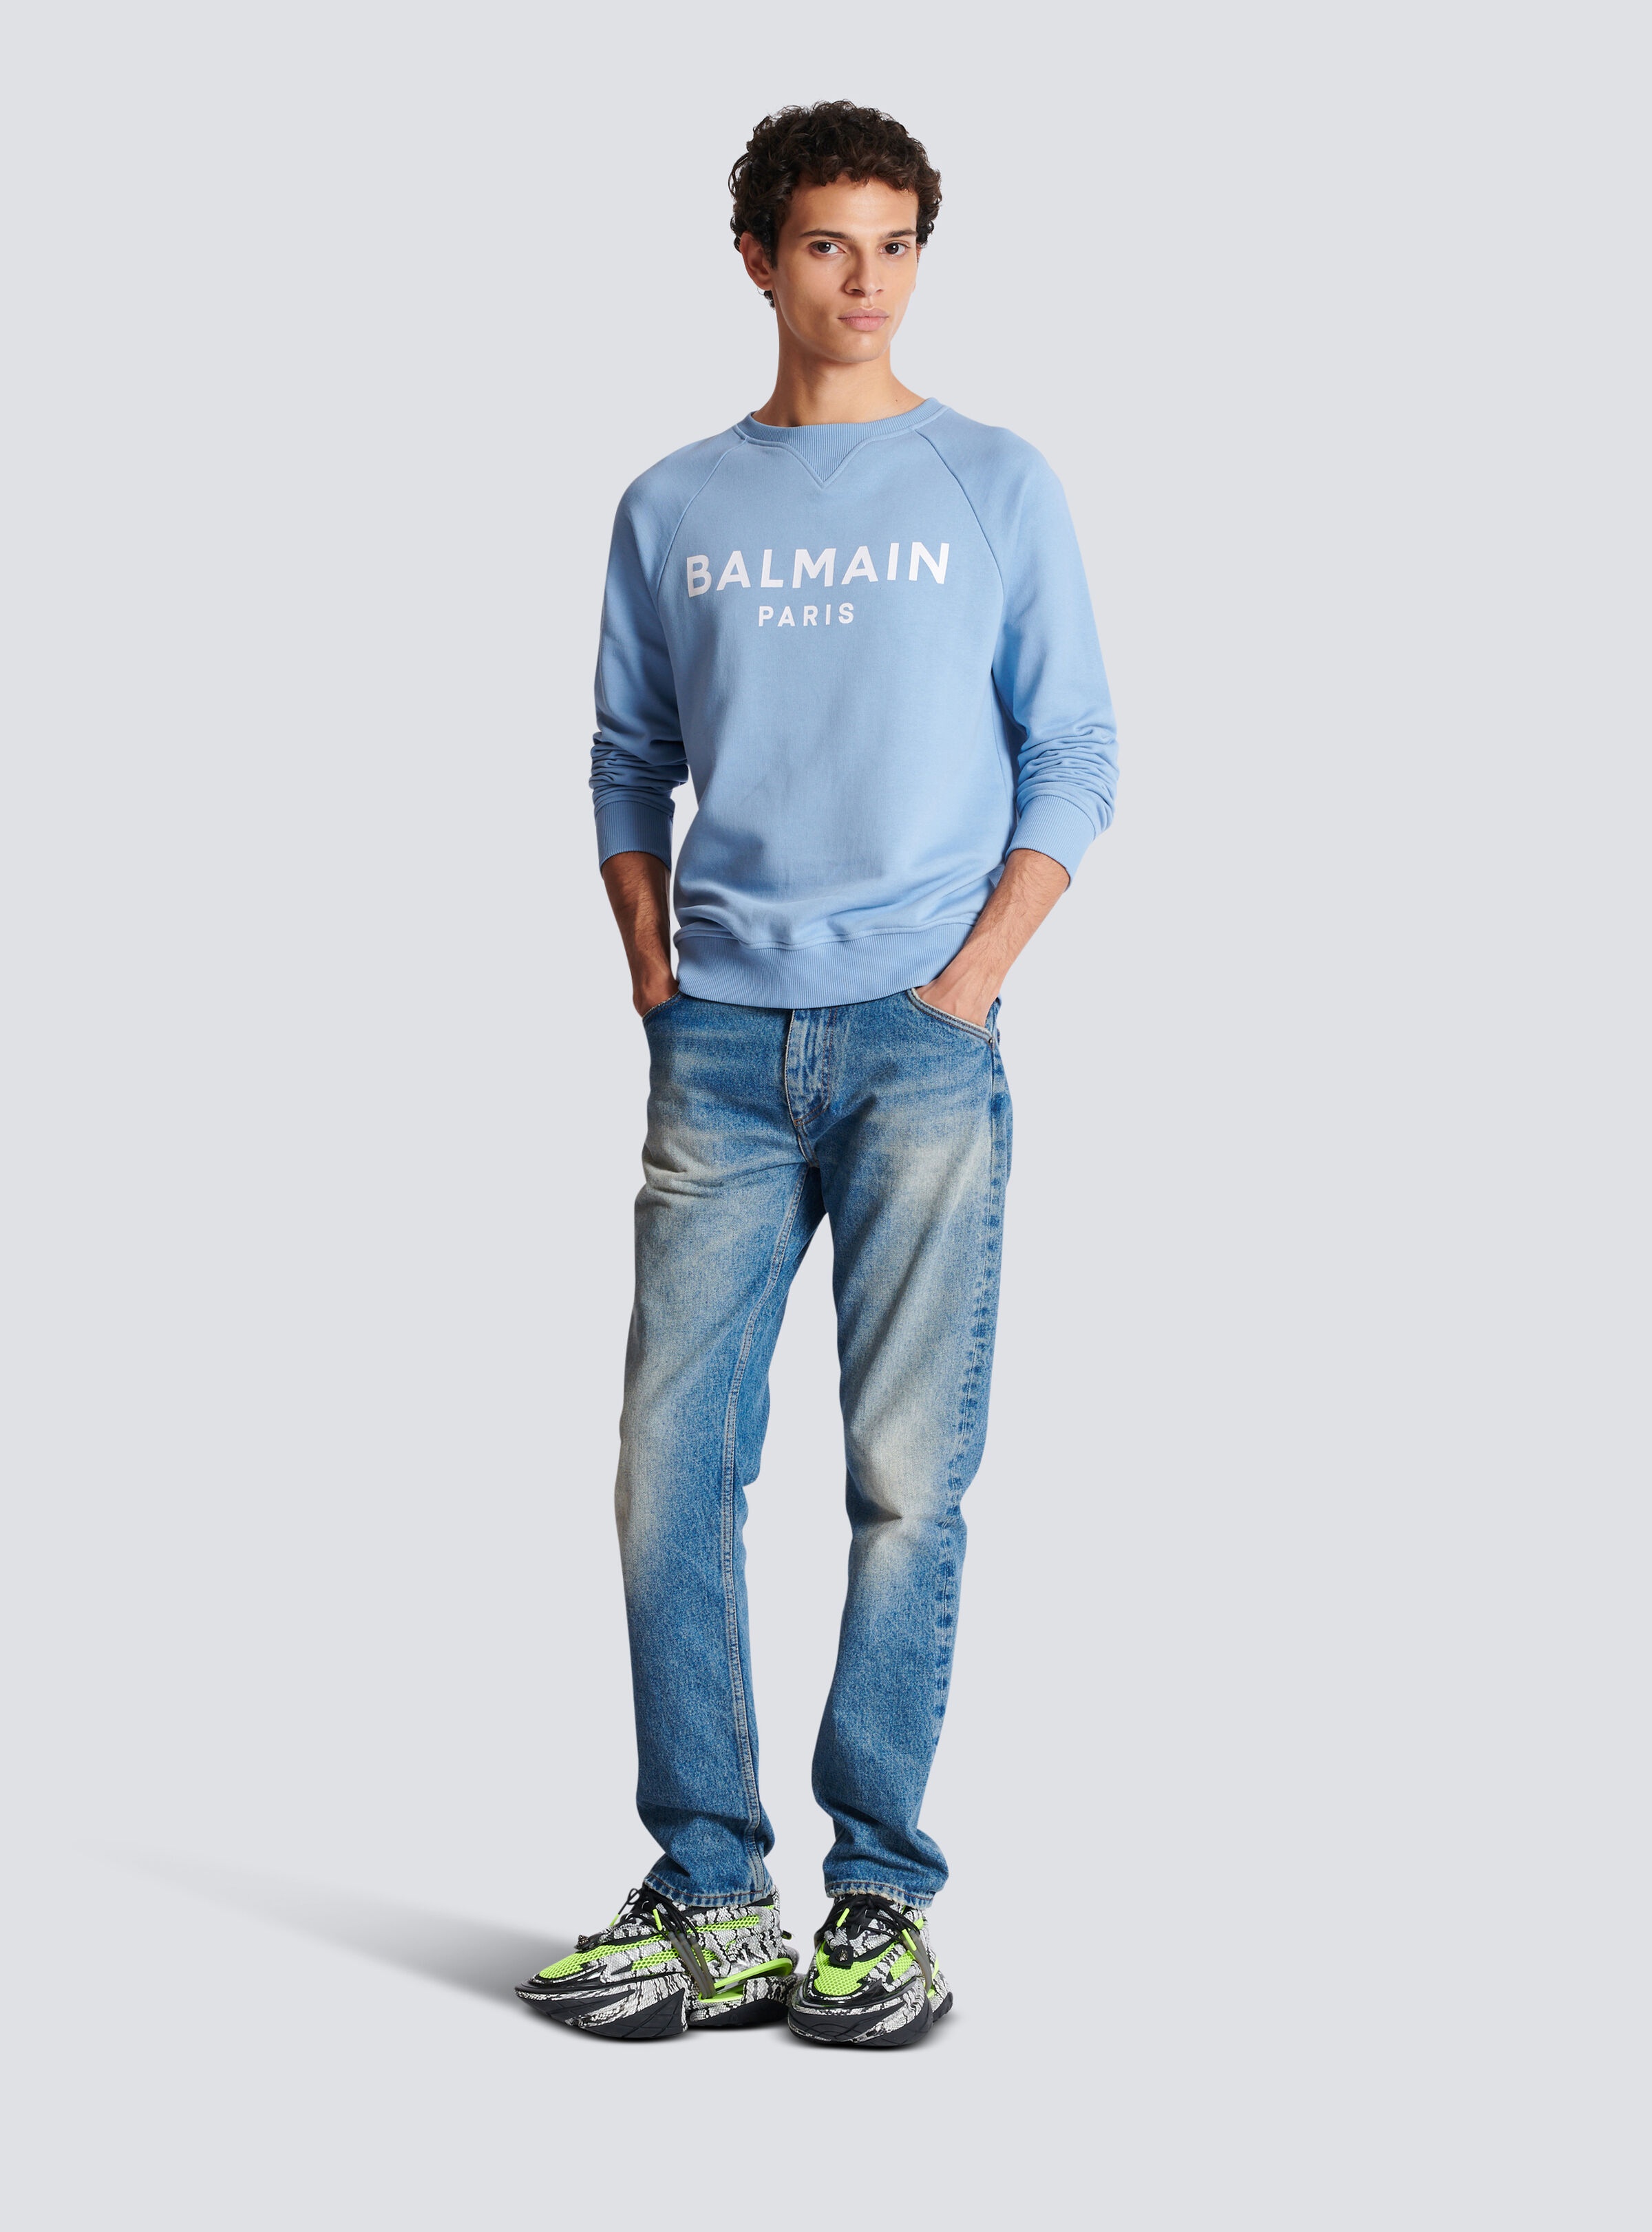 Balmain Paris sweatshirt - 2